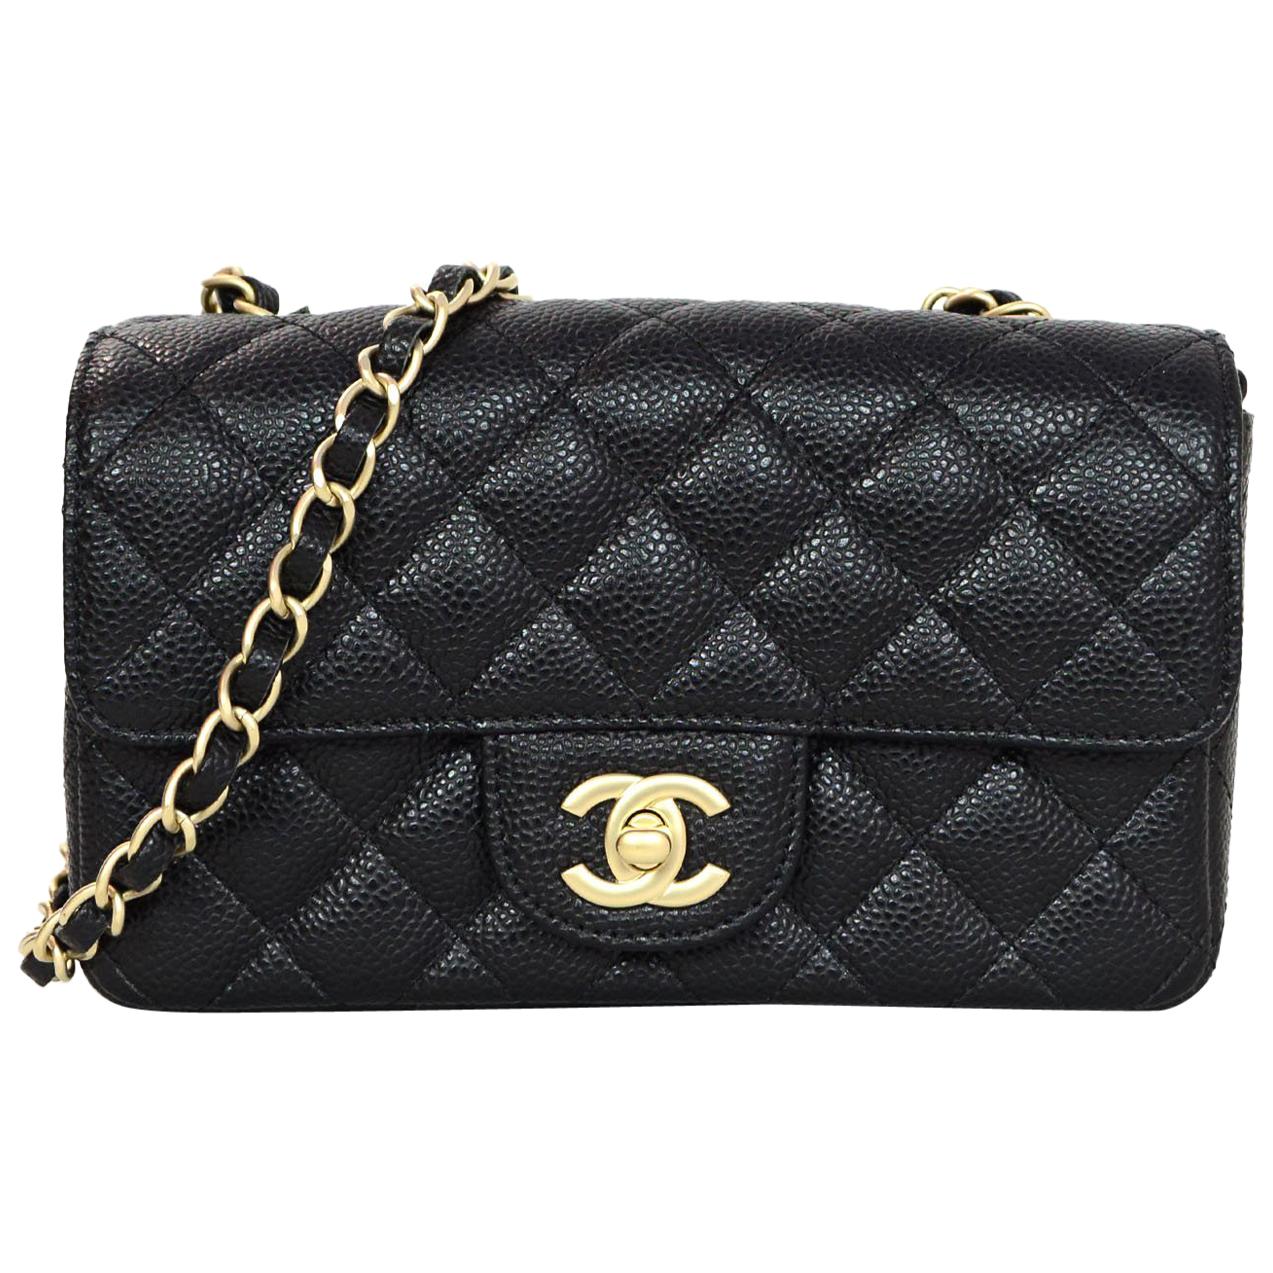 Chanel Black Quilted Caviar Leather Rectangular Mini Flap Crossbody Bag